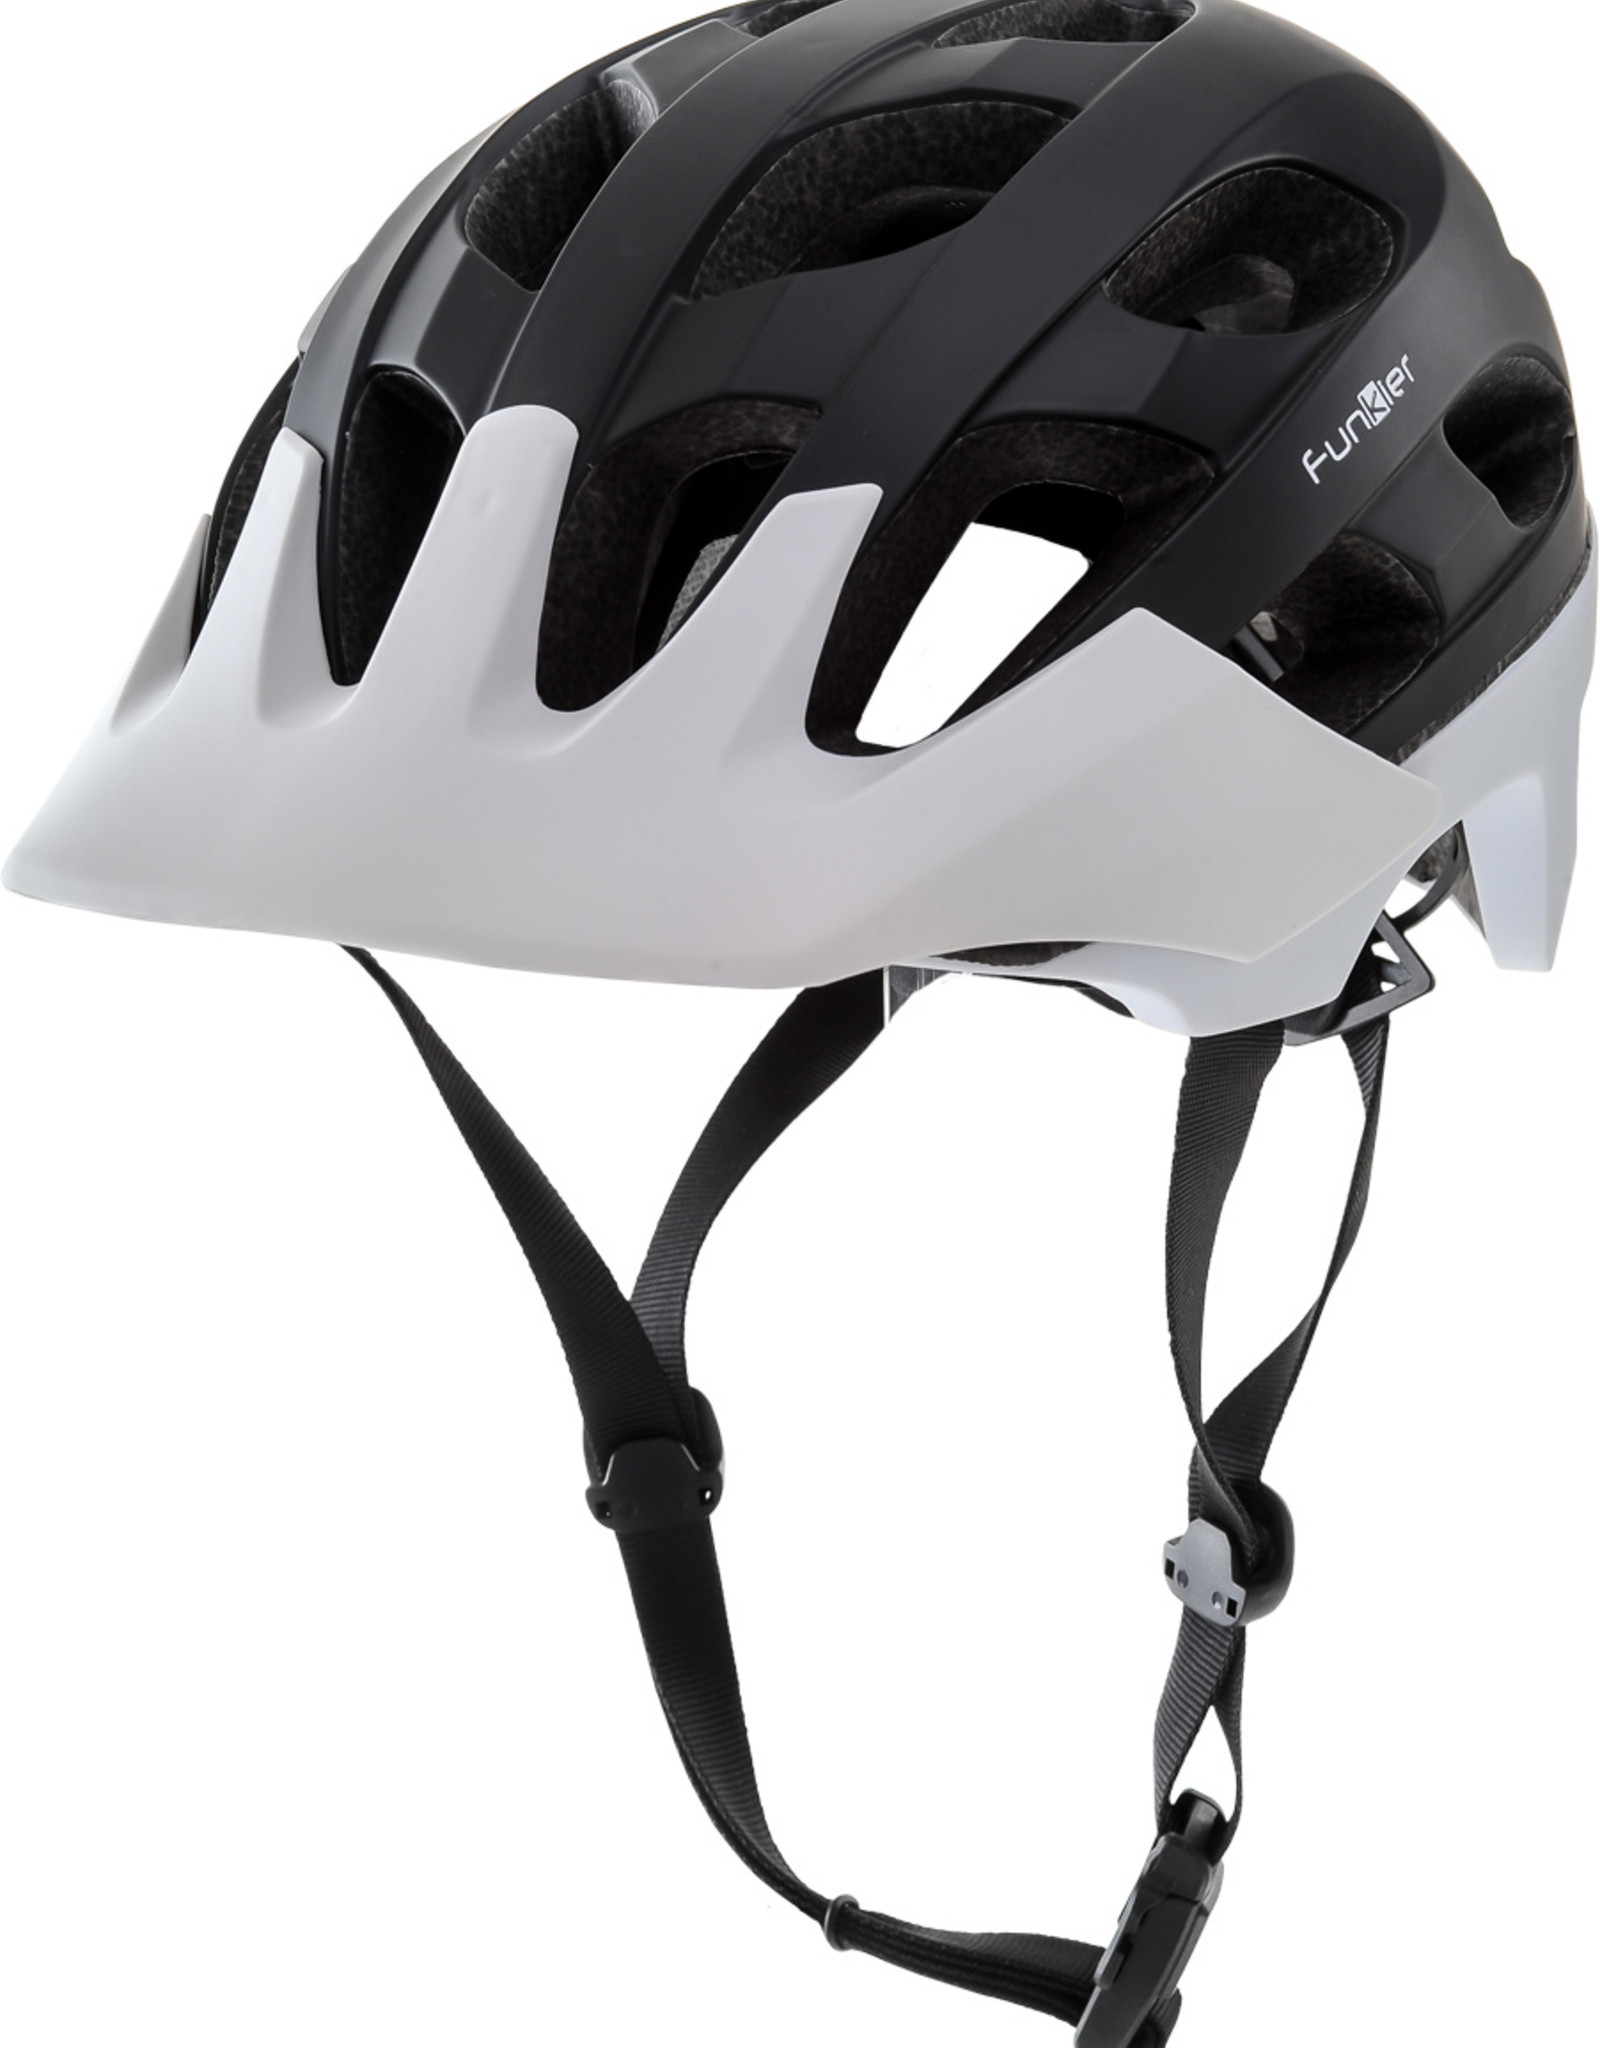 Funkier Camba MTB All Mountain Helmet in Black/White